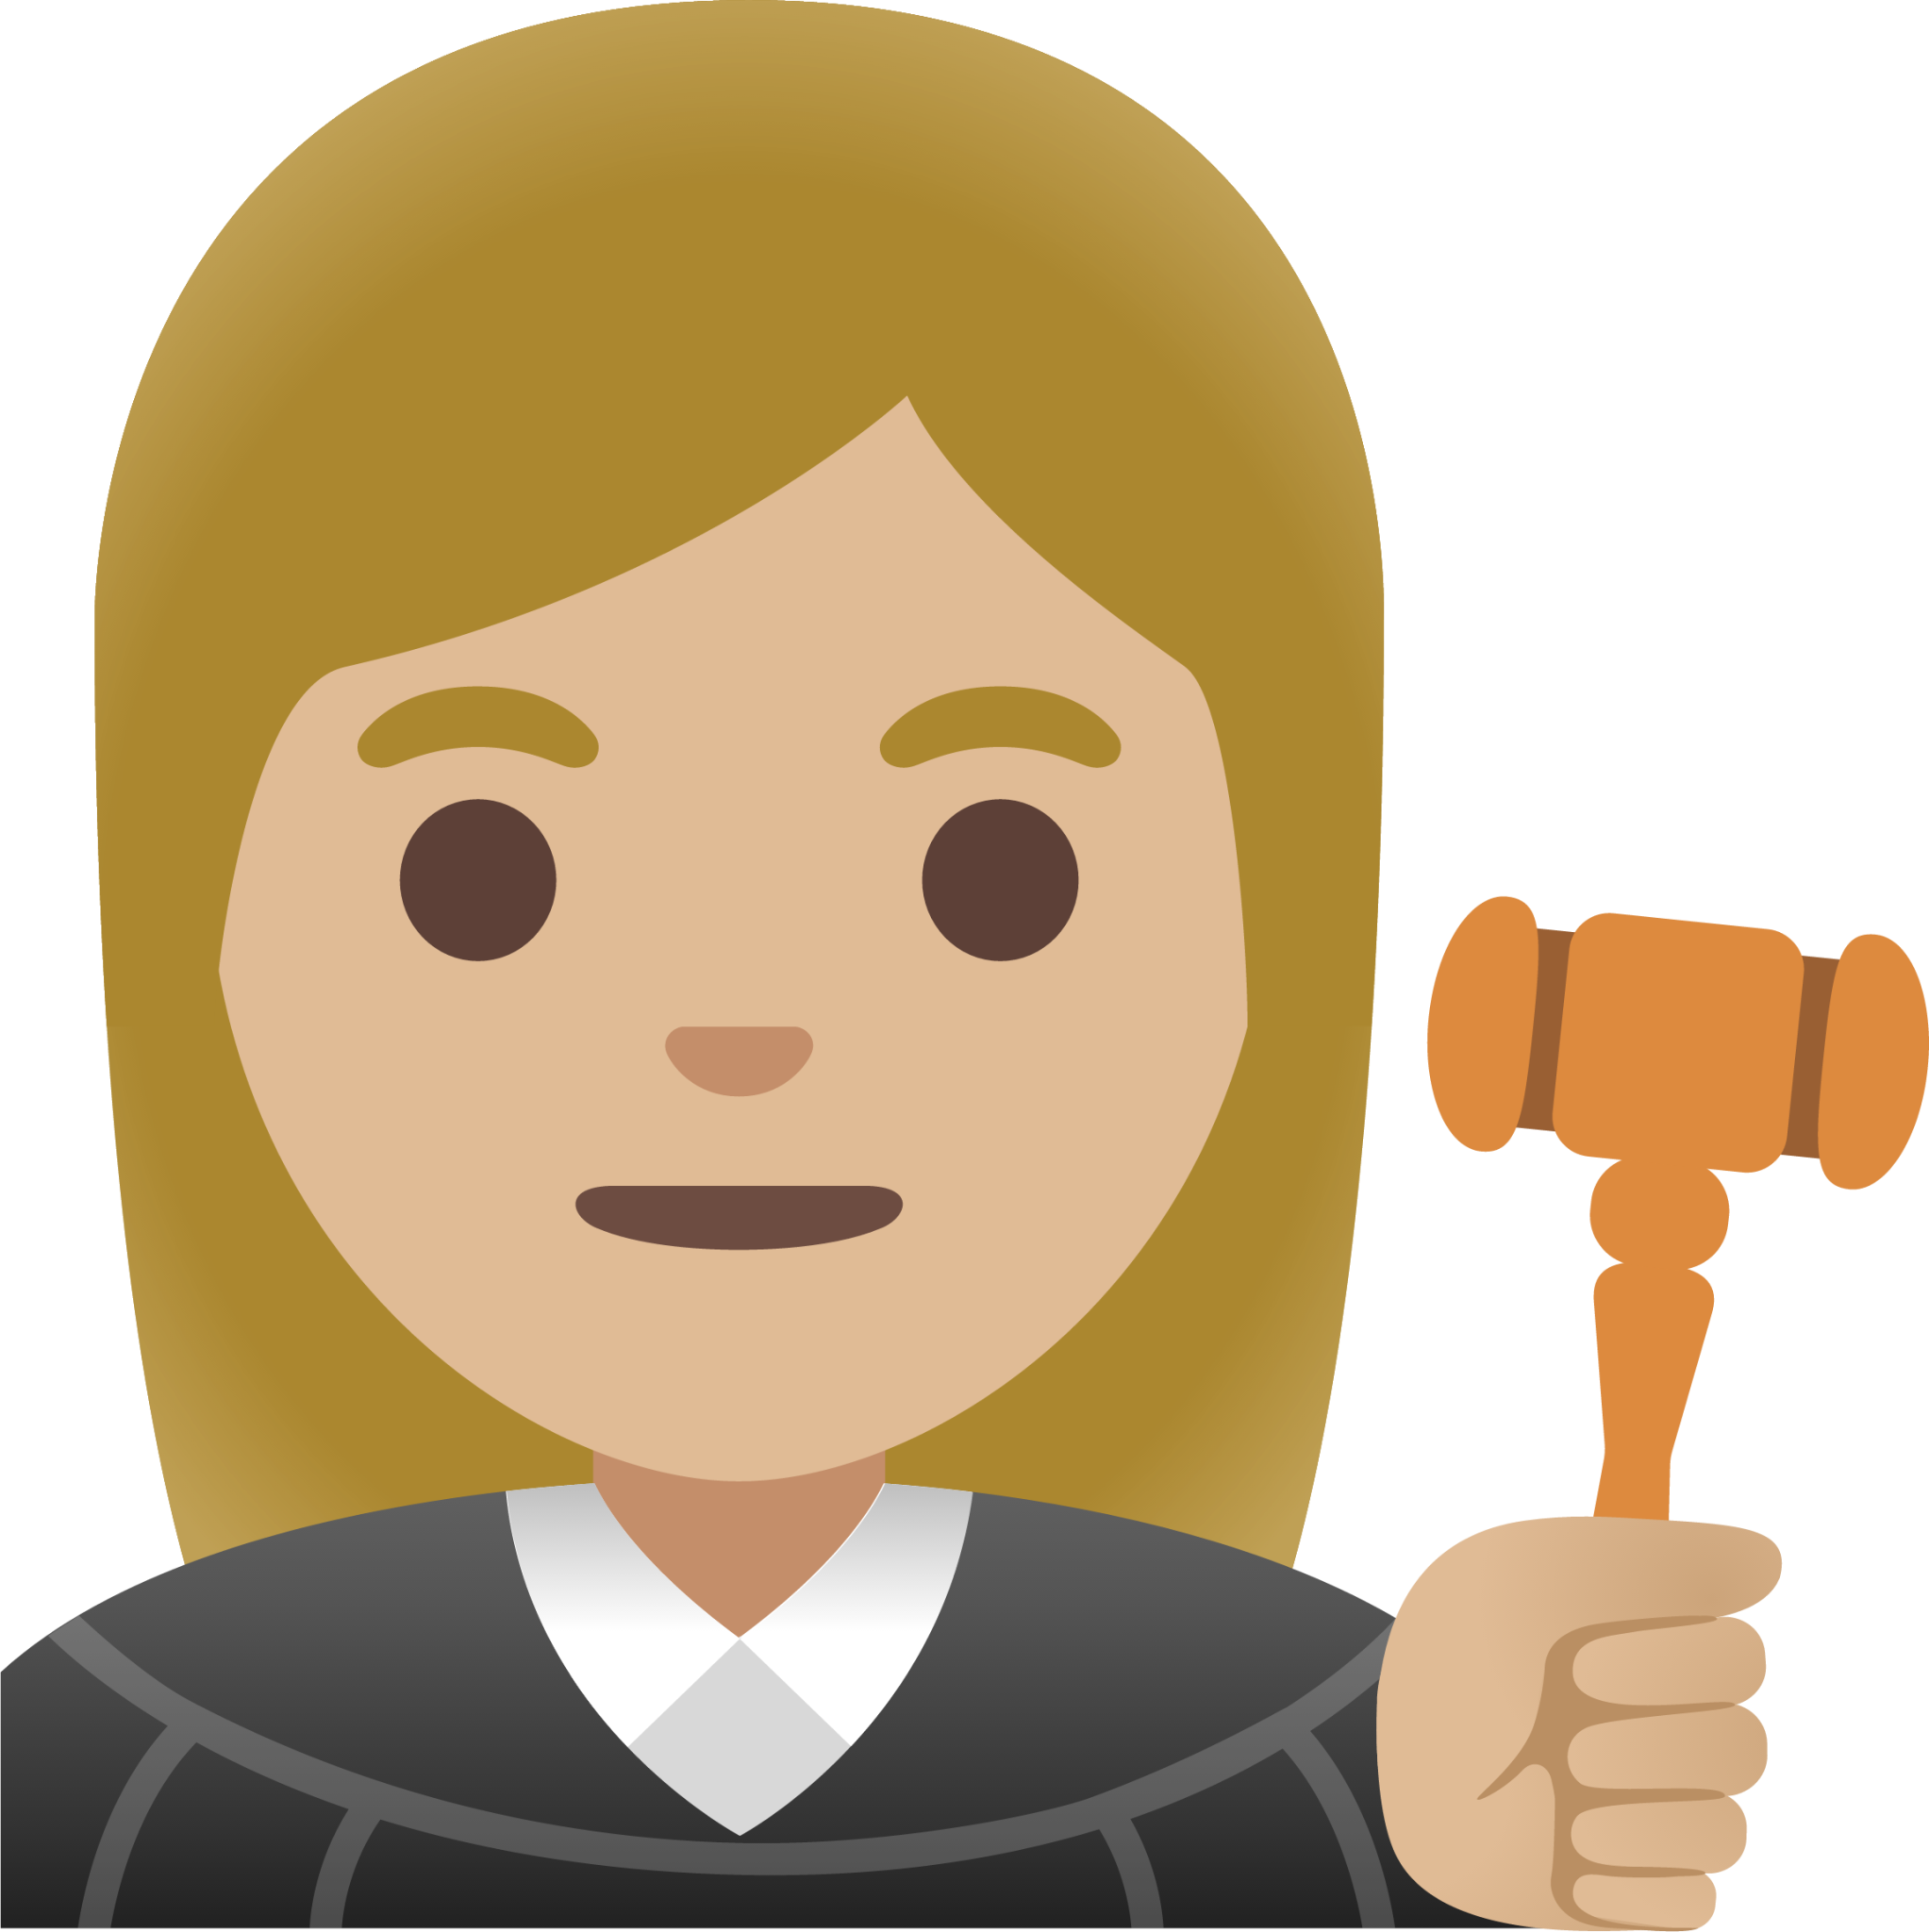 woman judge: medium-light skin tone emoji